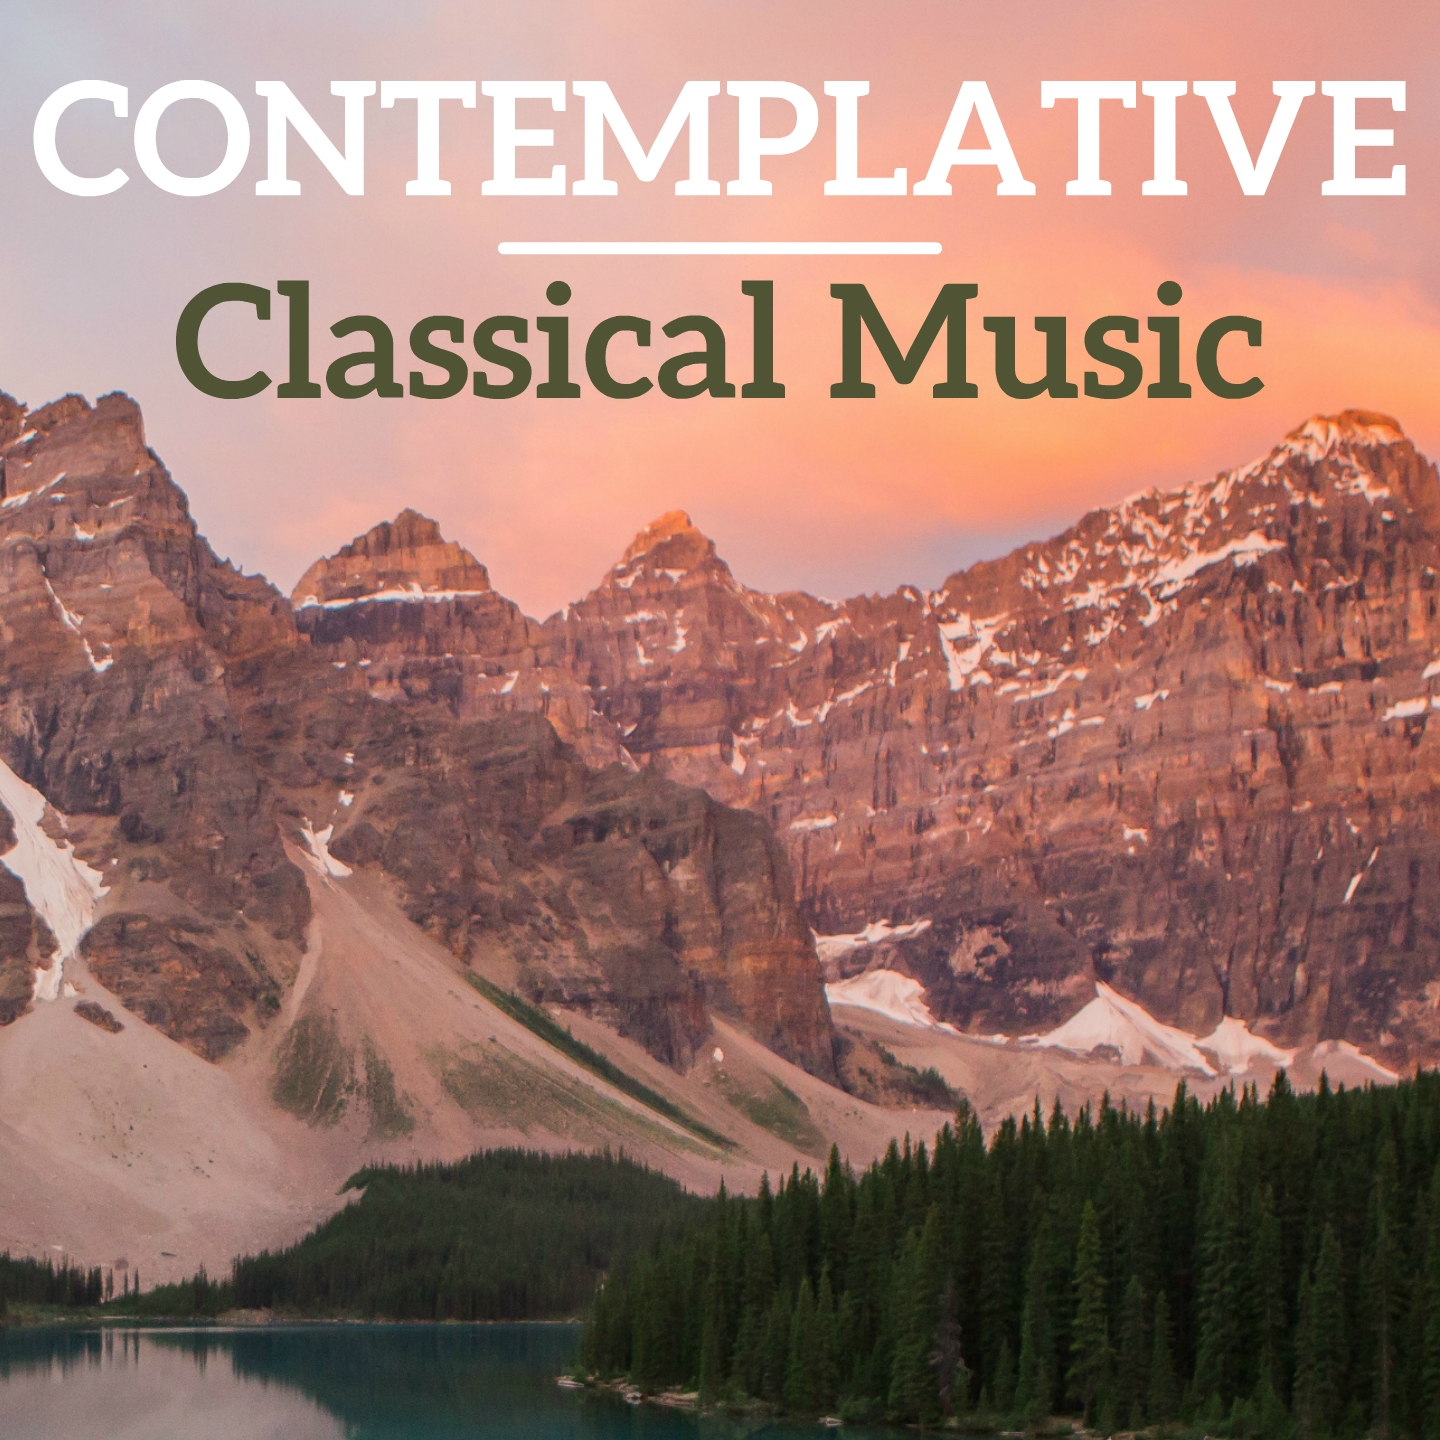 Contemplative Classical Music